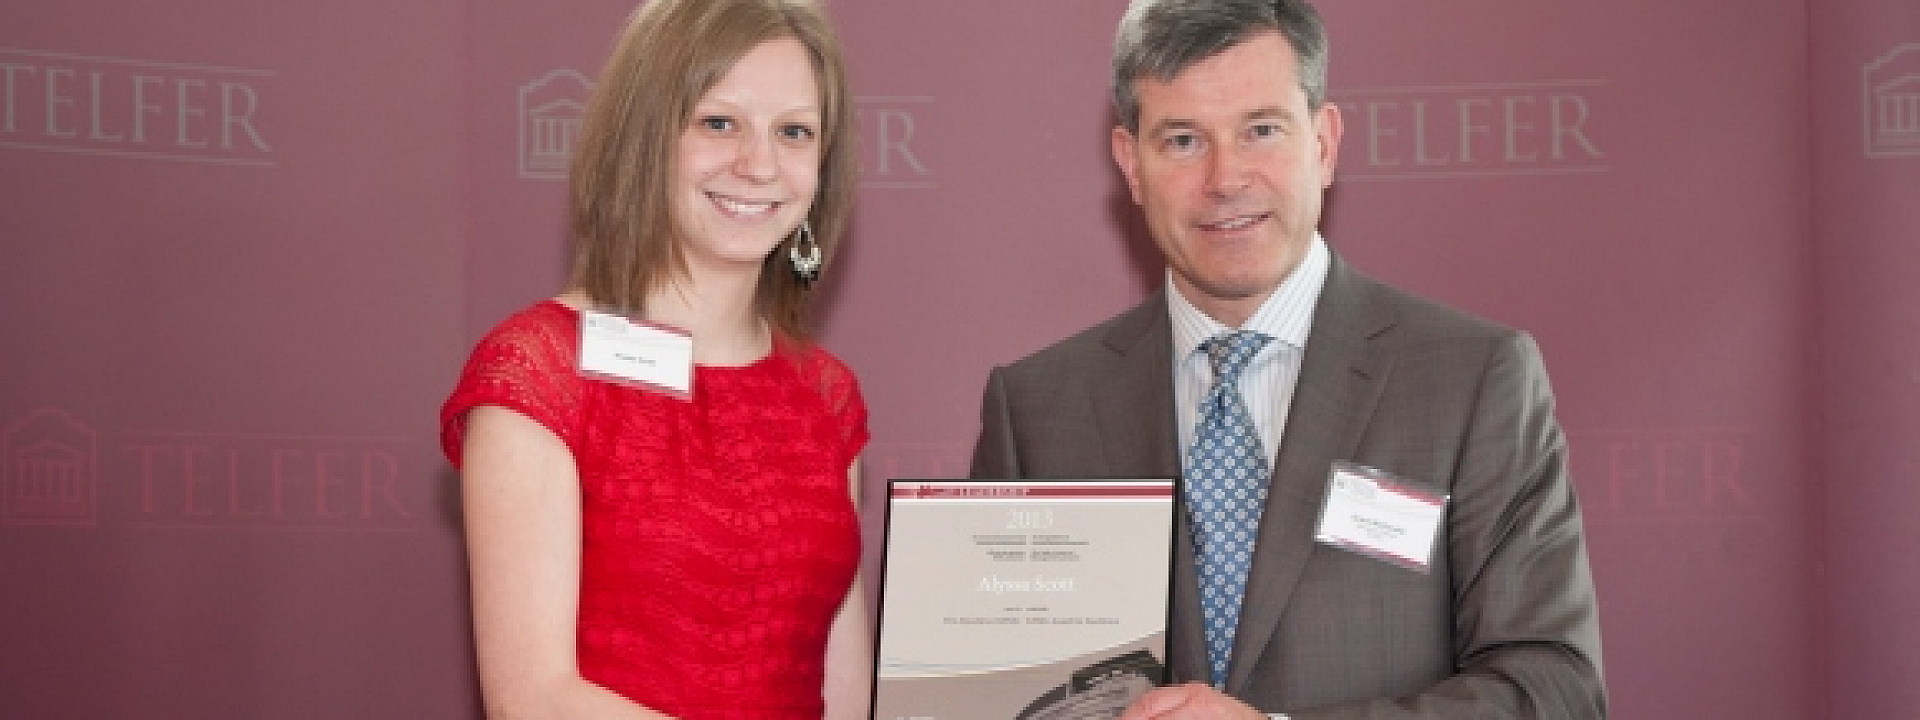 Alyssa Scott Receives the KPMG Award for Excellence